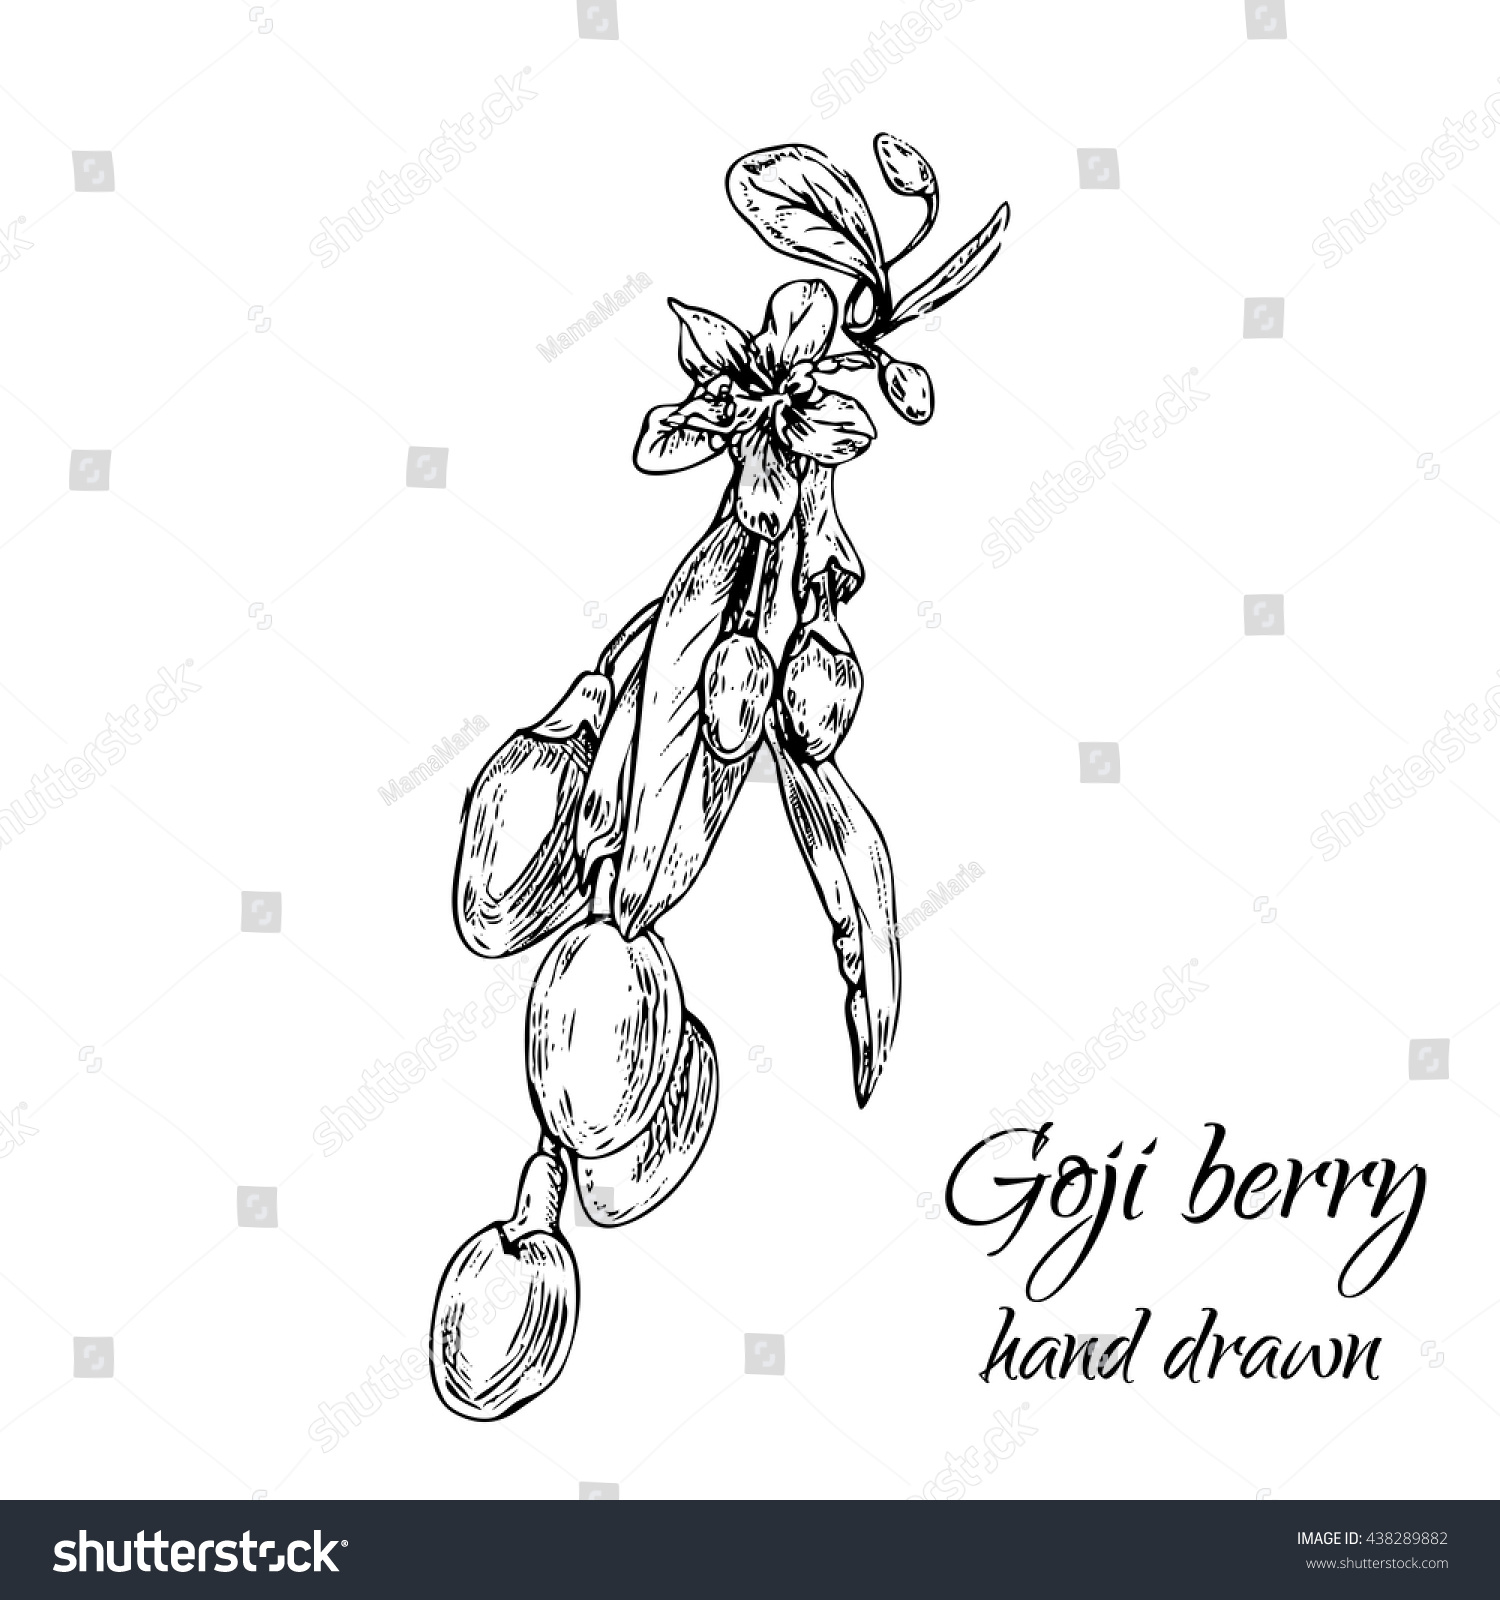 Hand drawn goji berry monochrome engraving illustration.  Nature organic super-foods design elements.  Vector illustration  #438289882